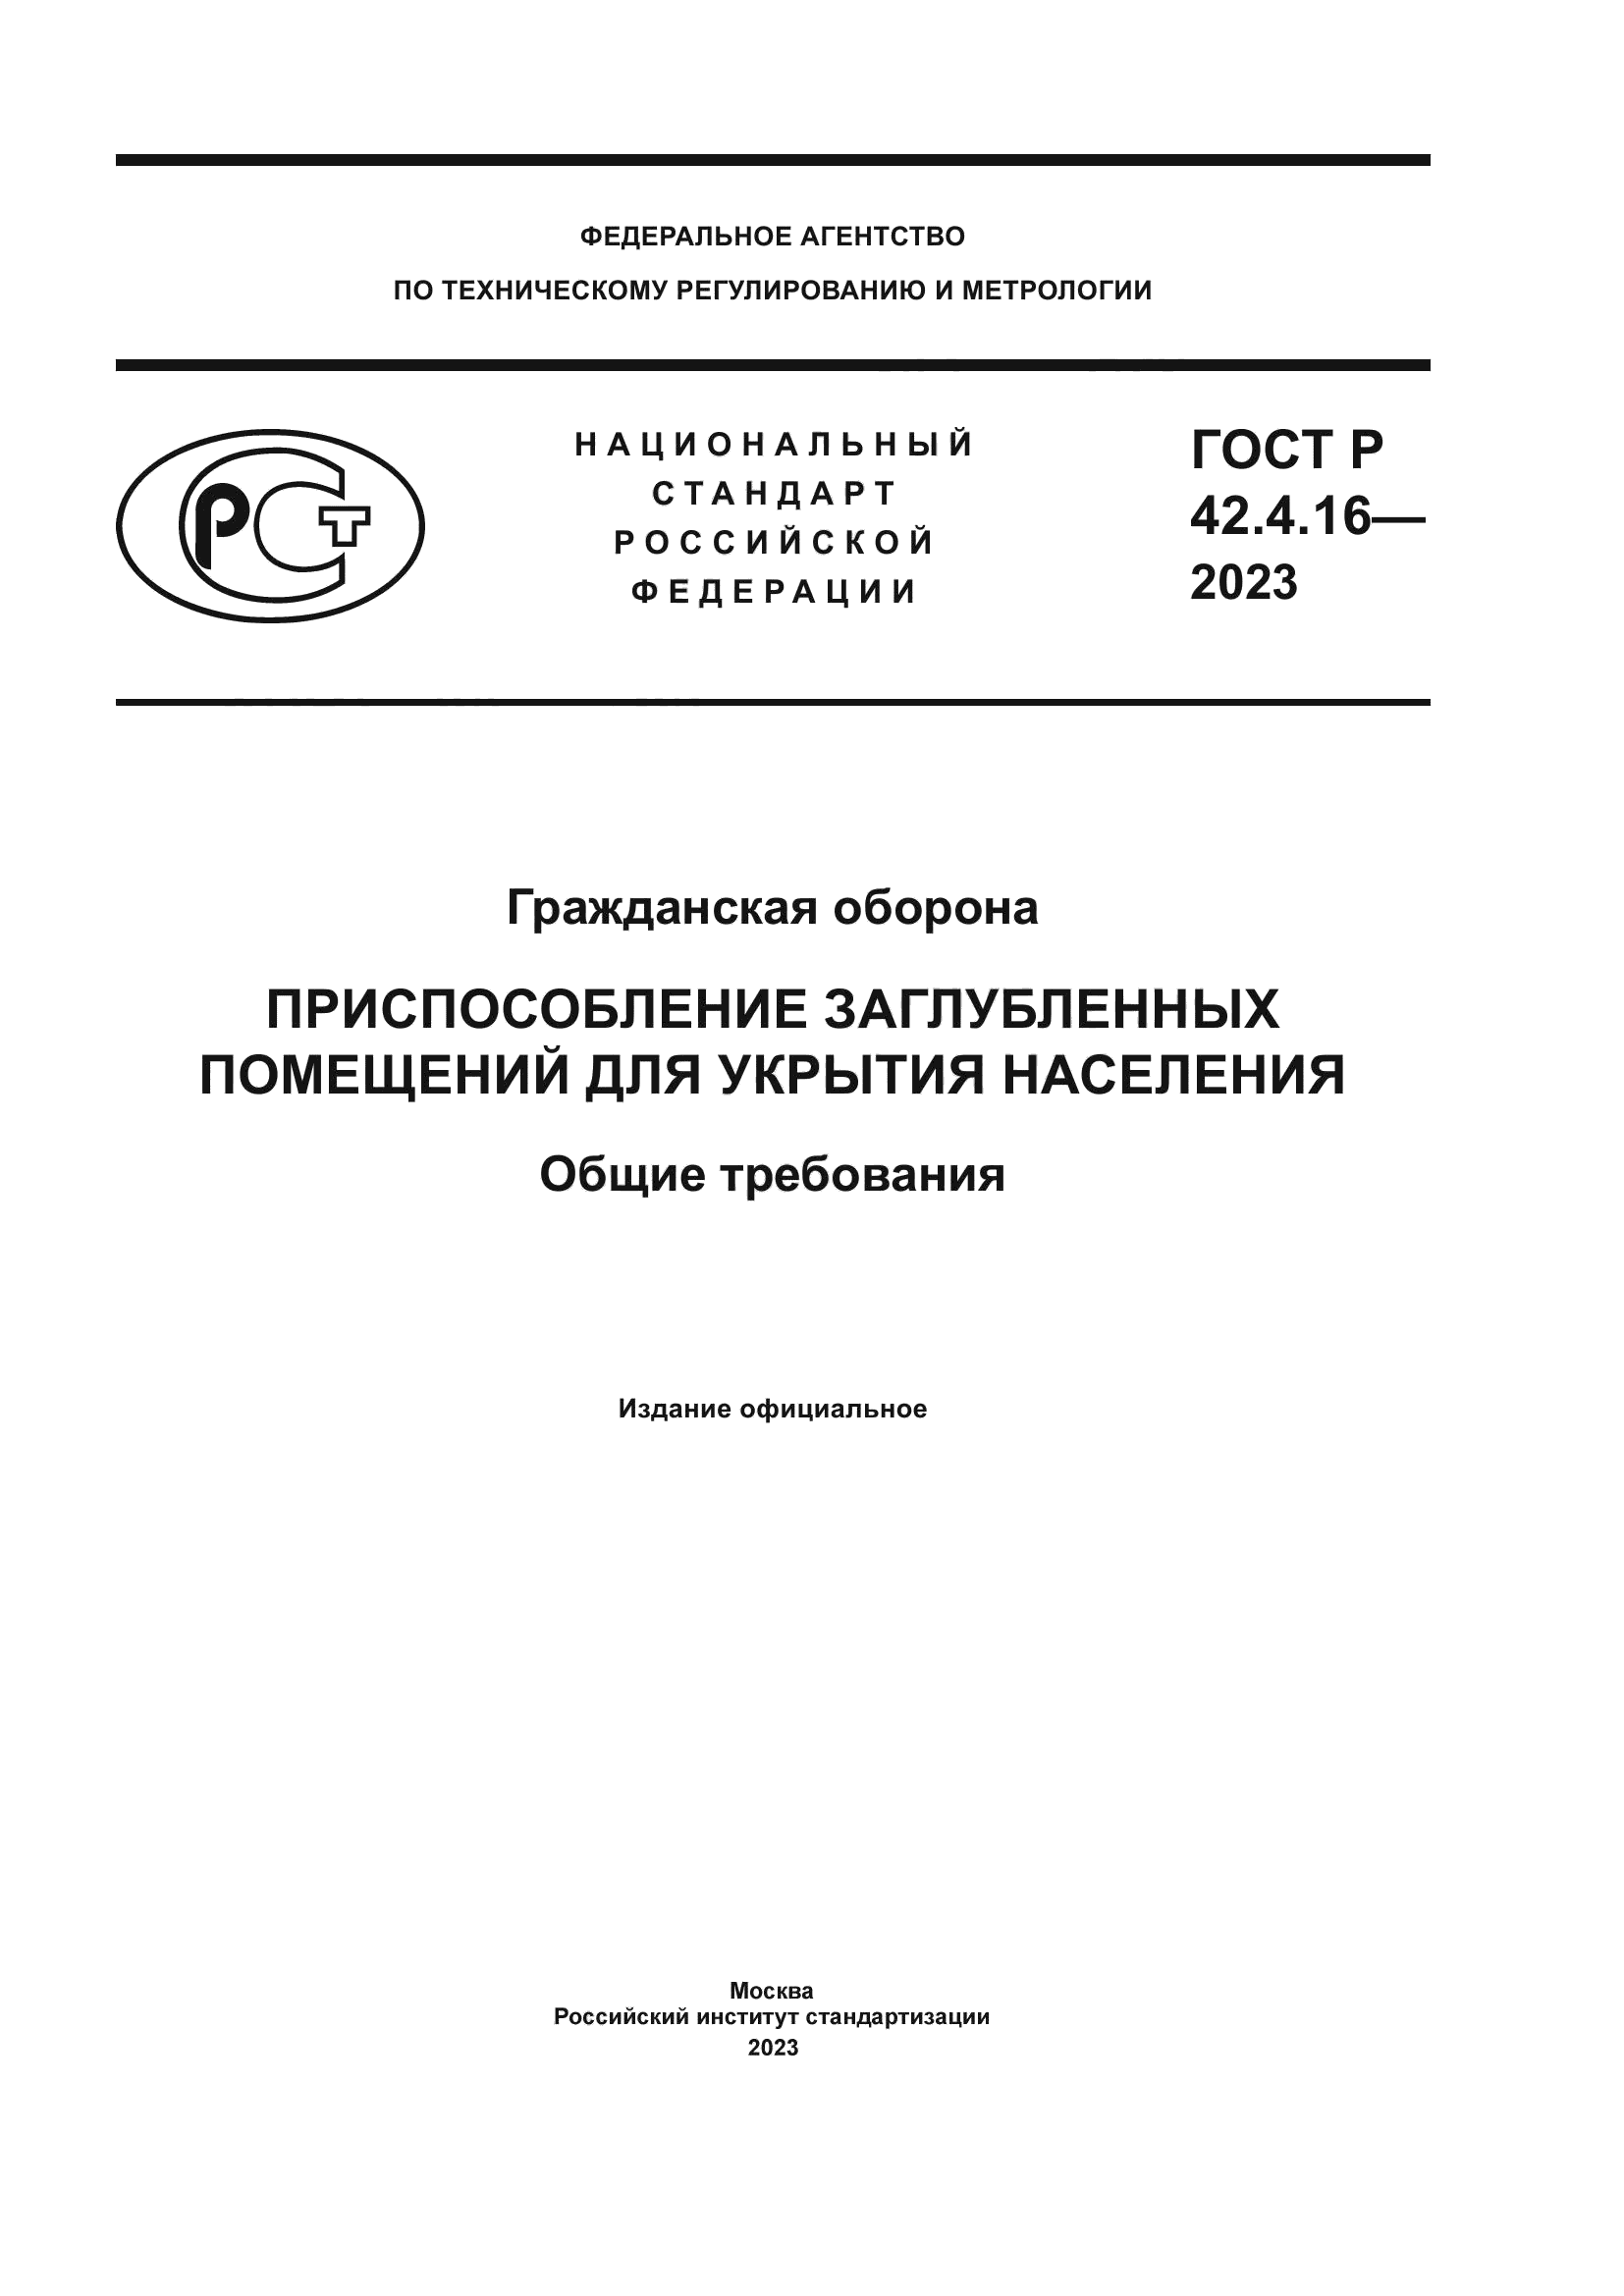 ГОСТ Р 42.4.16-2023